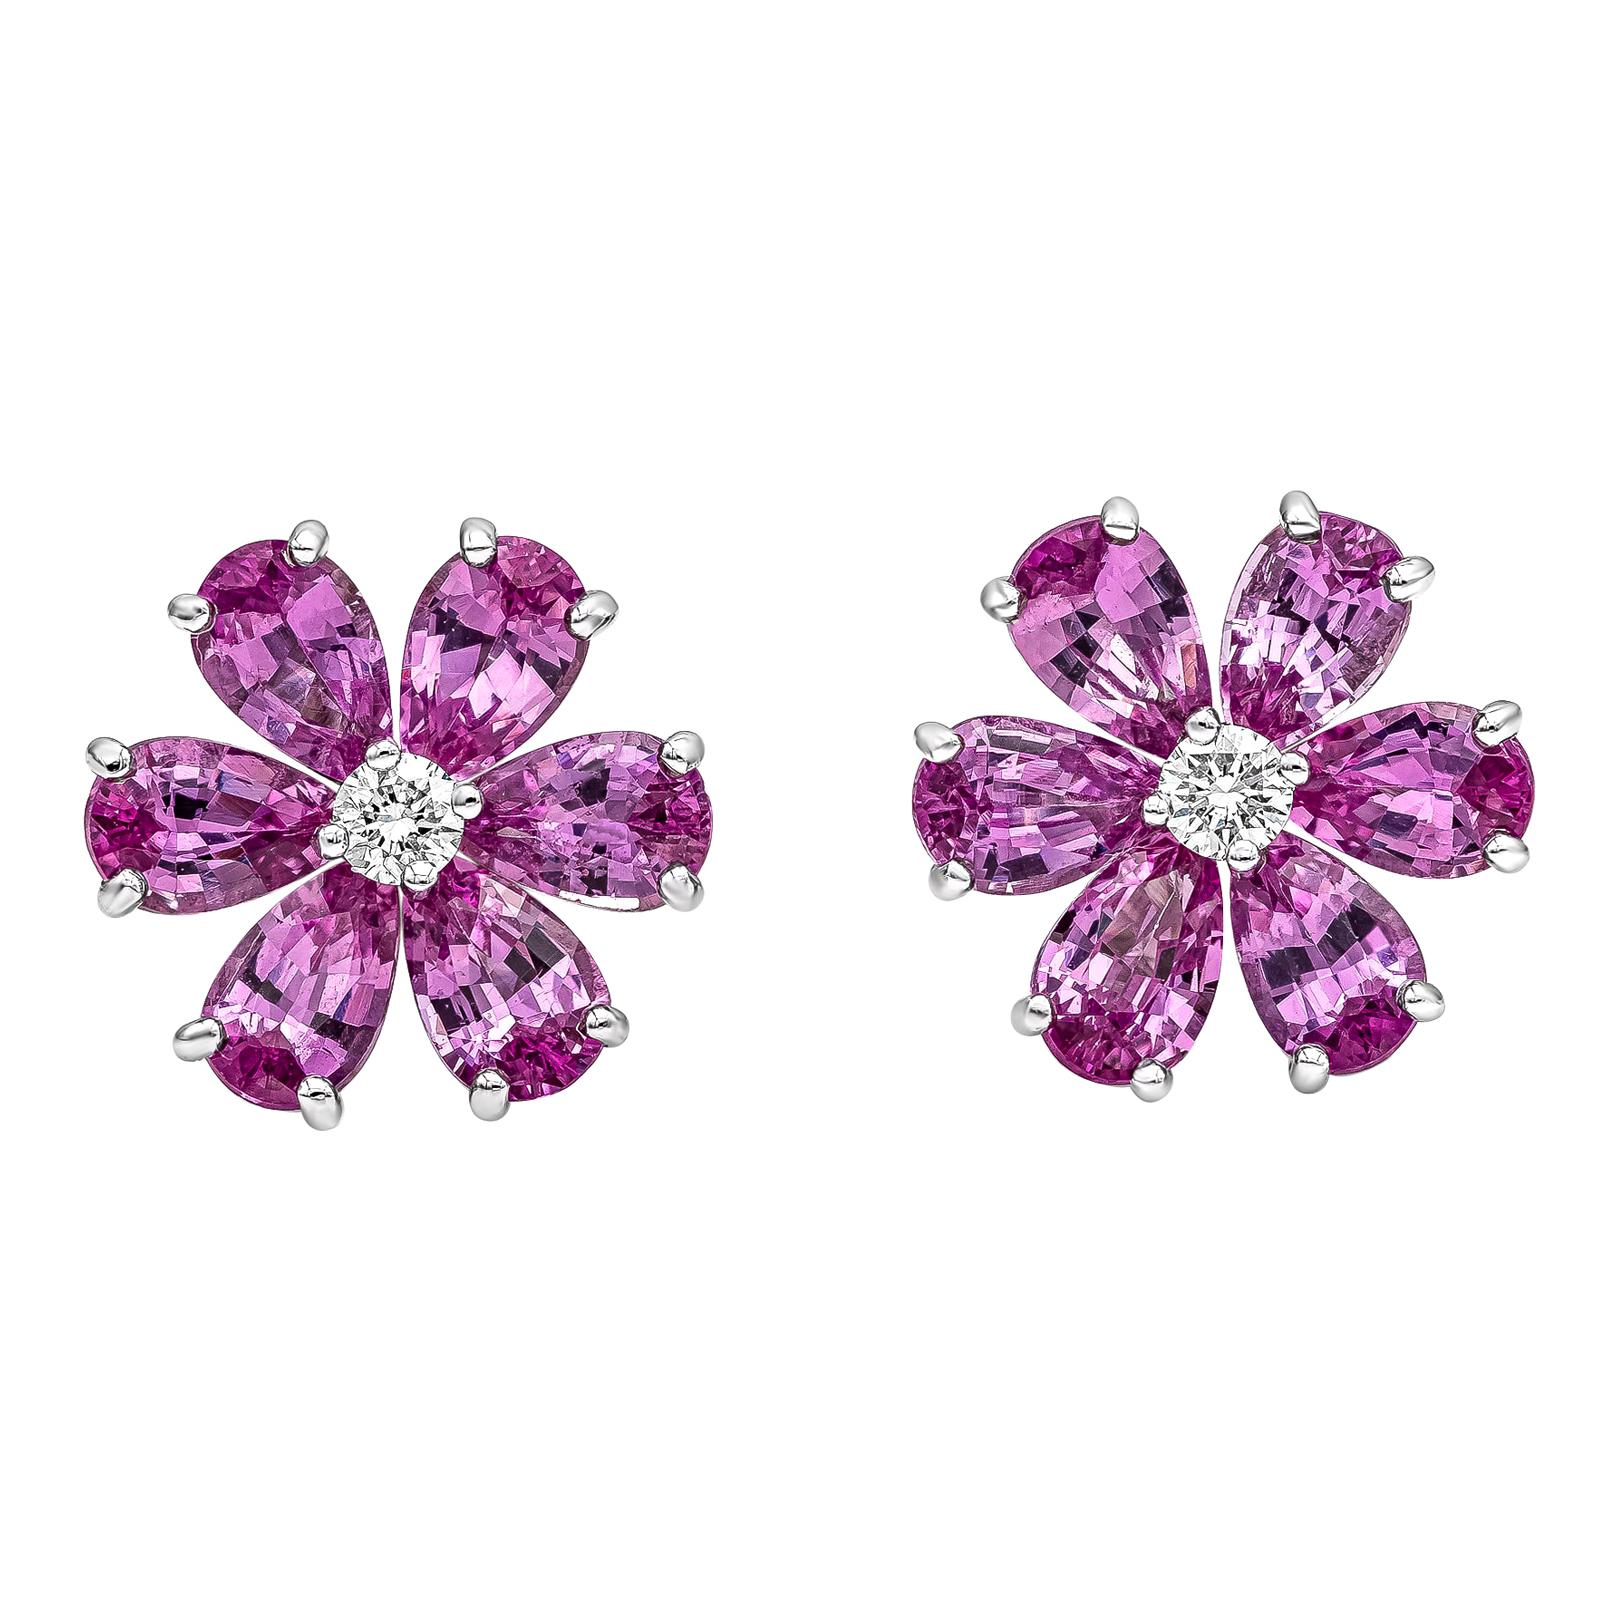 Roman Malakov 2.94 Carat Pink Sapphire and Diamond Flower Earrings